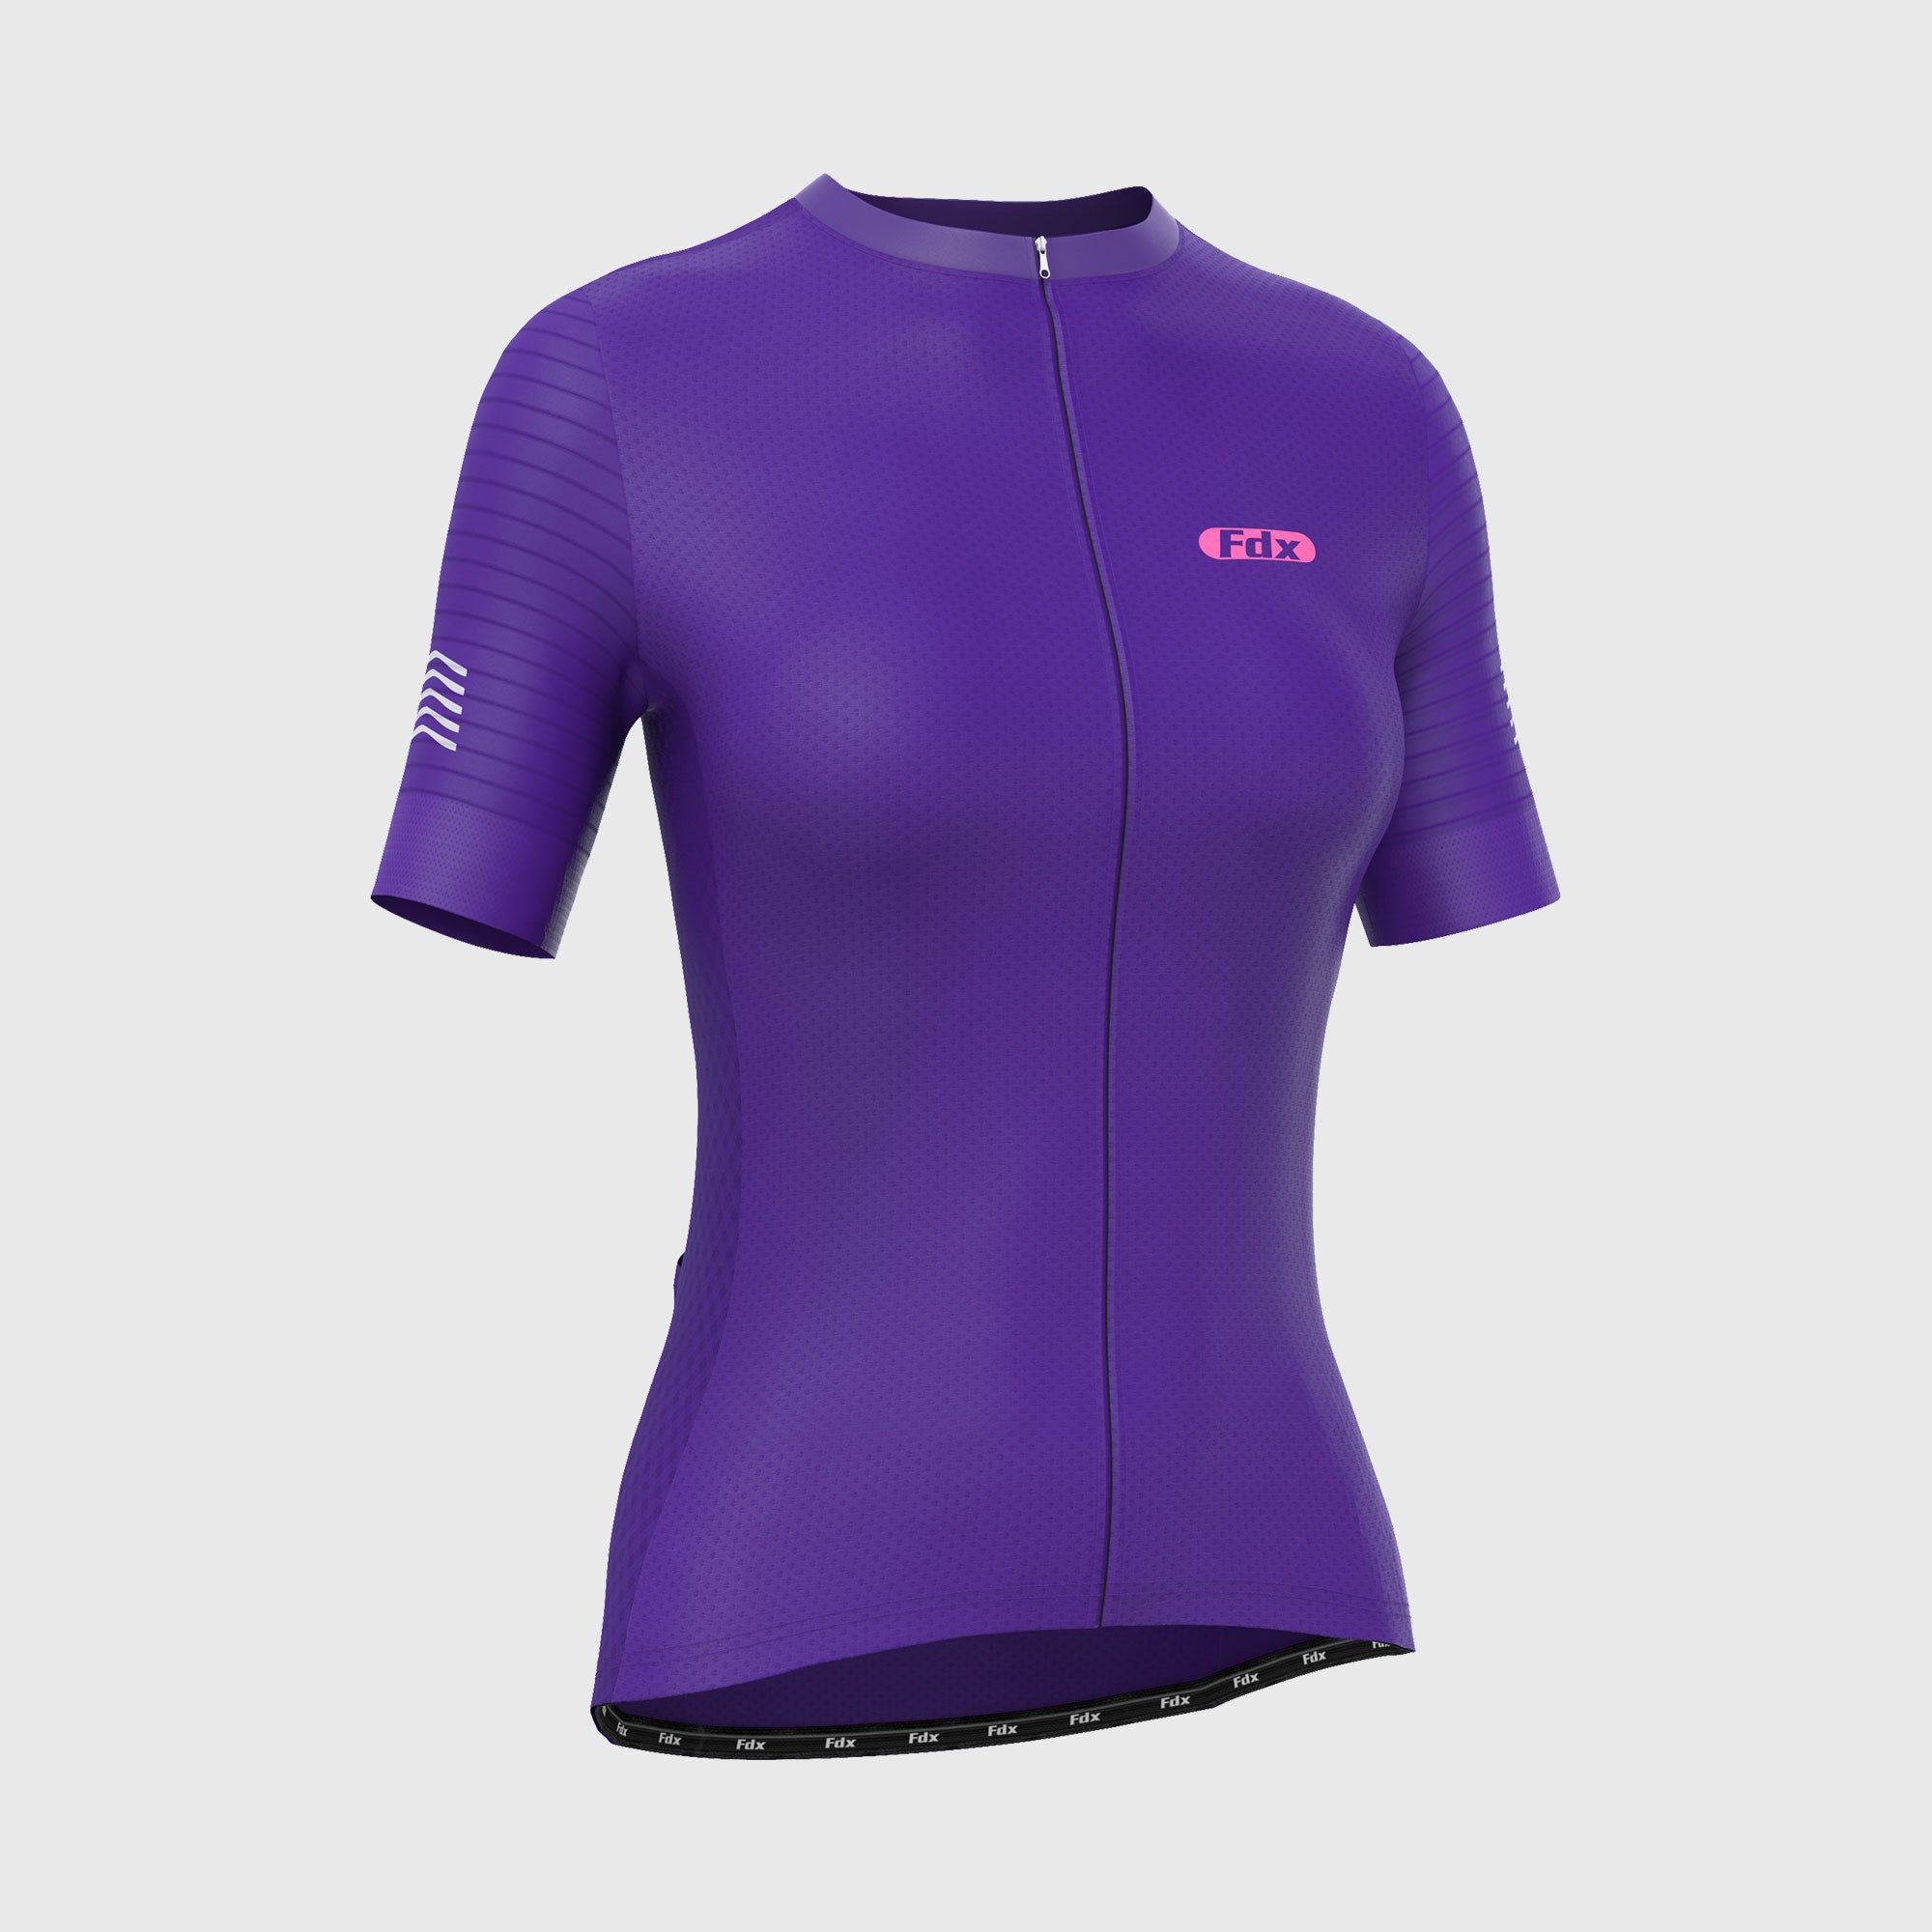 Fdx Women's Purple Short Sleeve Cycling Jersey for Summer Best Road Bike Wear Top Light Weight, Full Zipper, Pockets & Hi-viz Reflectors - Essential